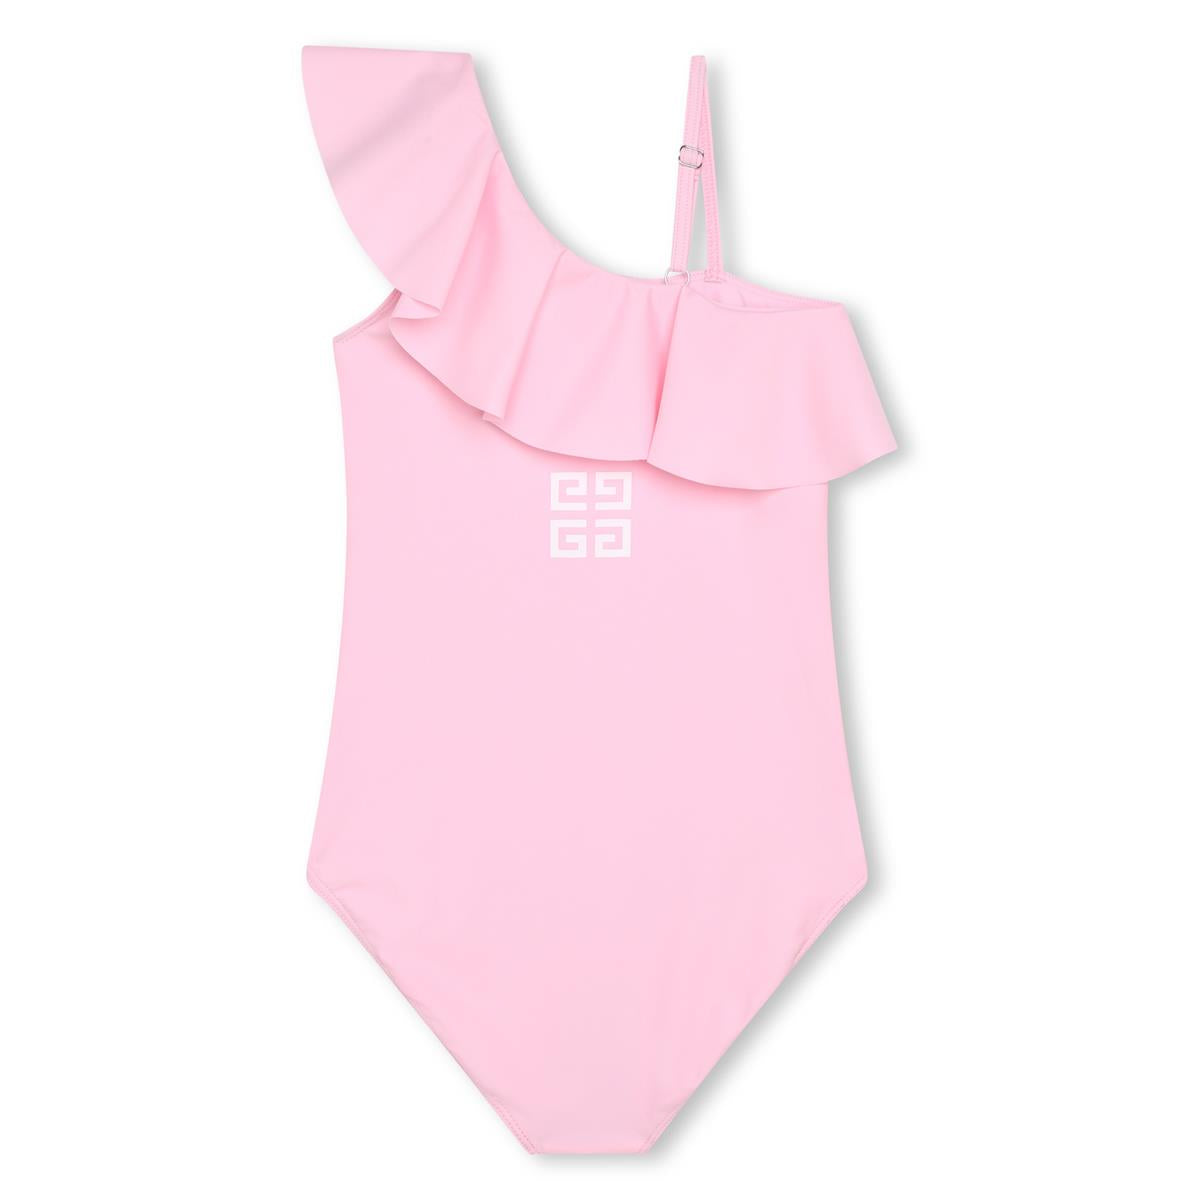 Girls Pink Swimsuit